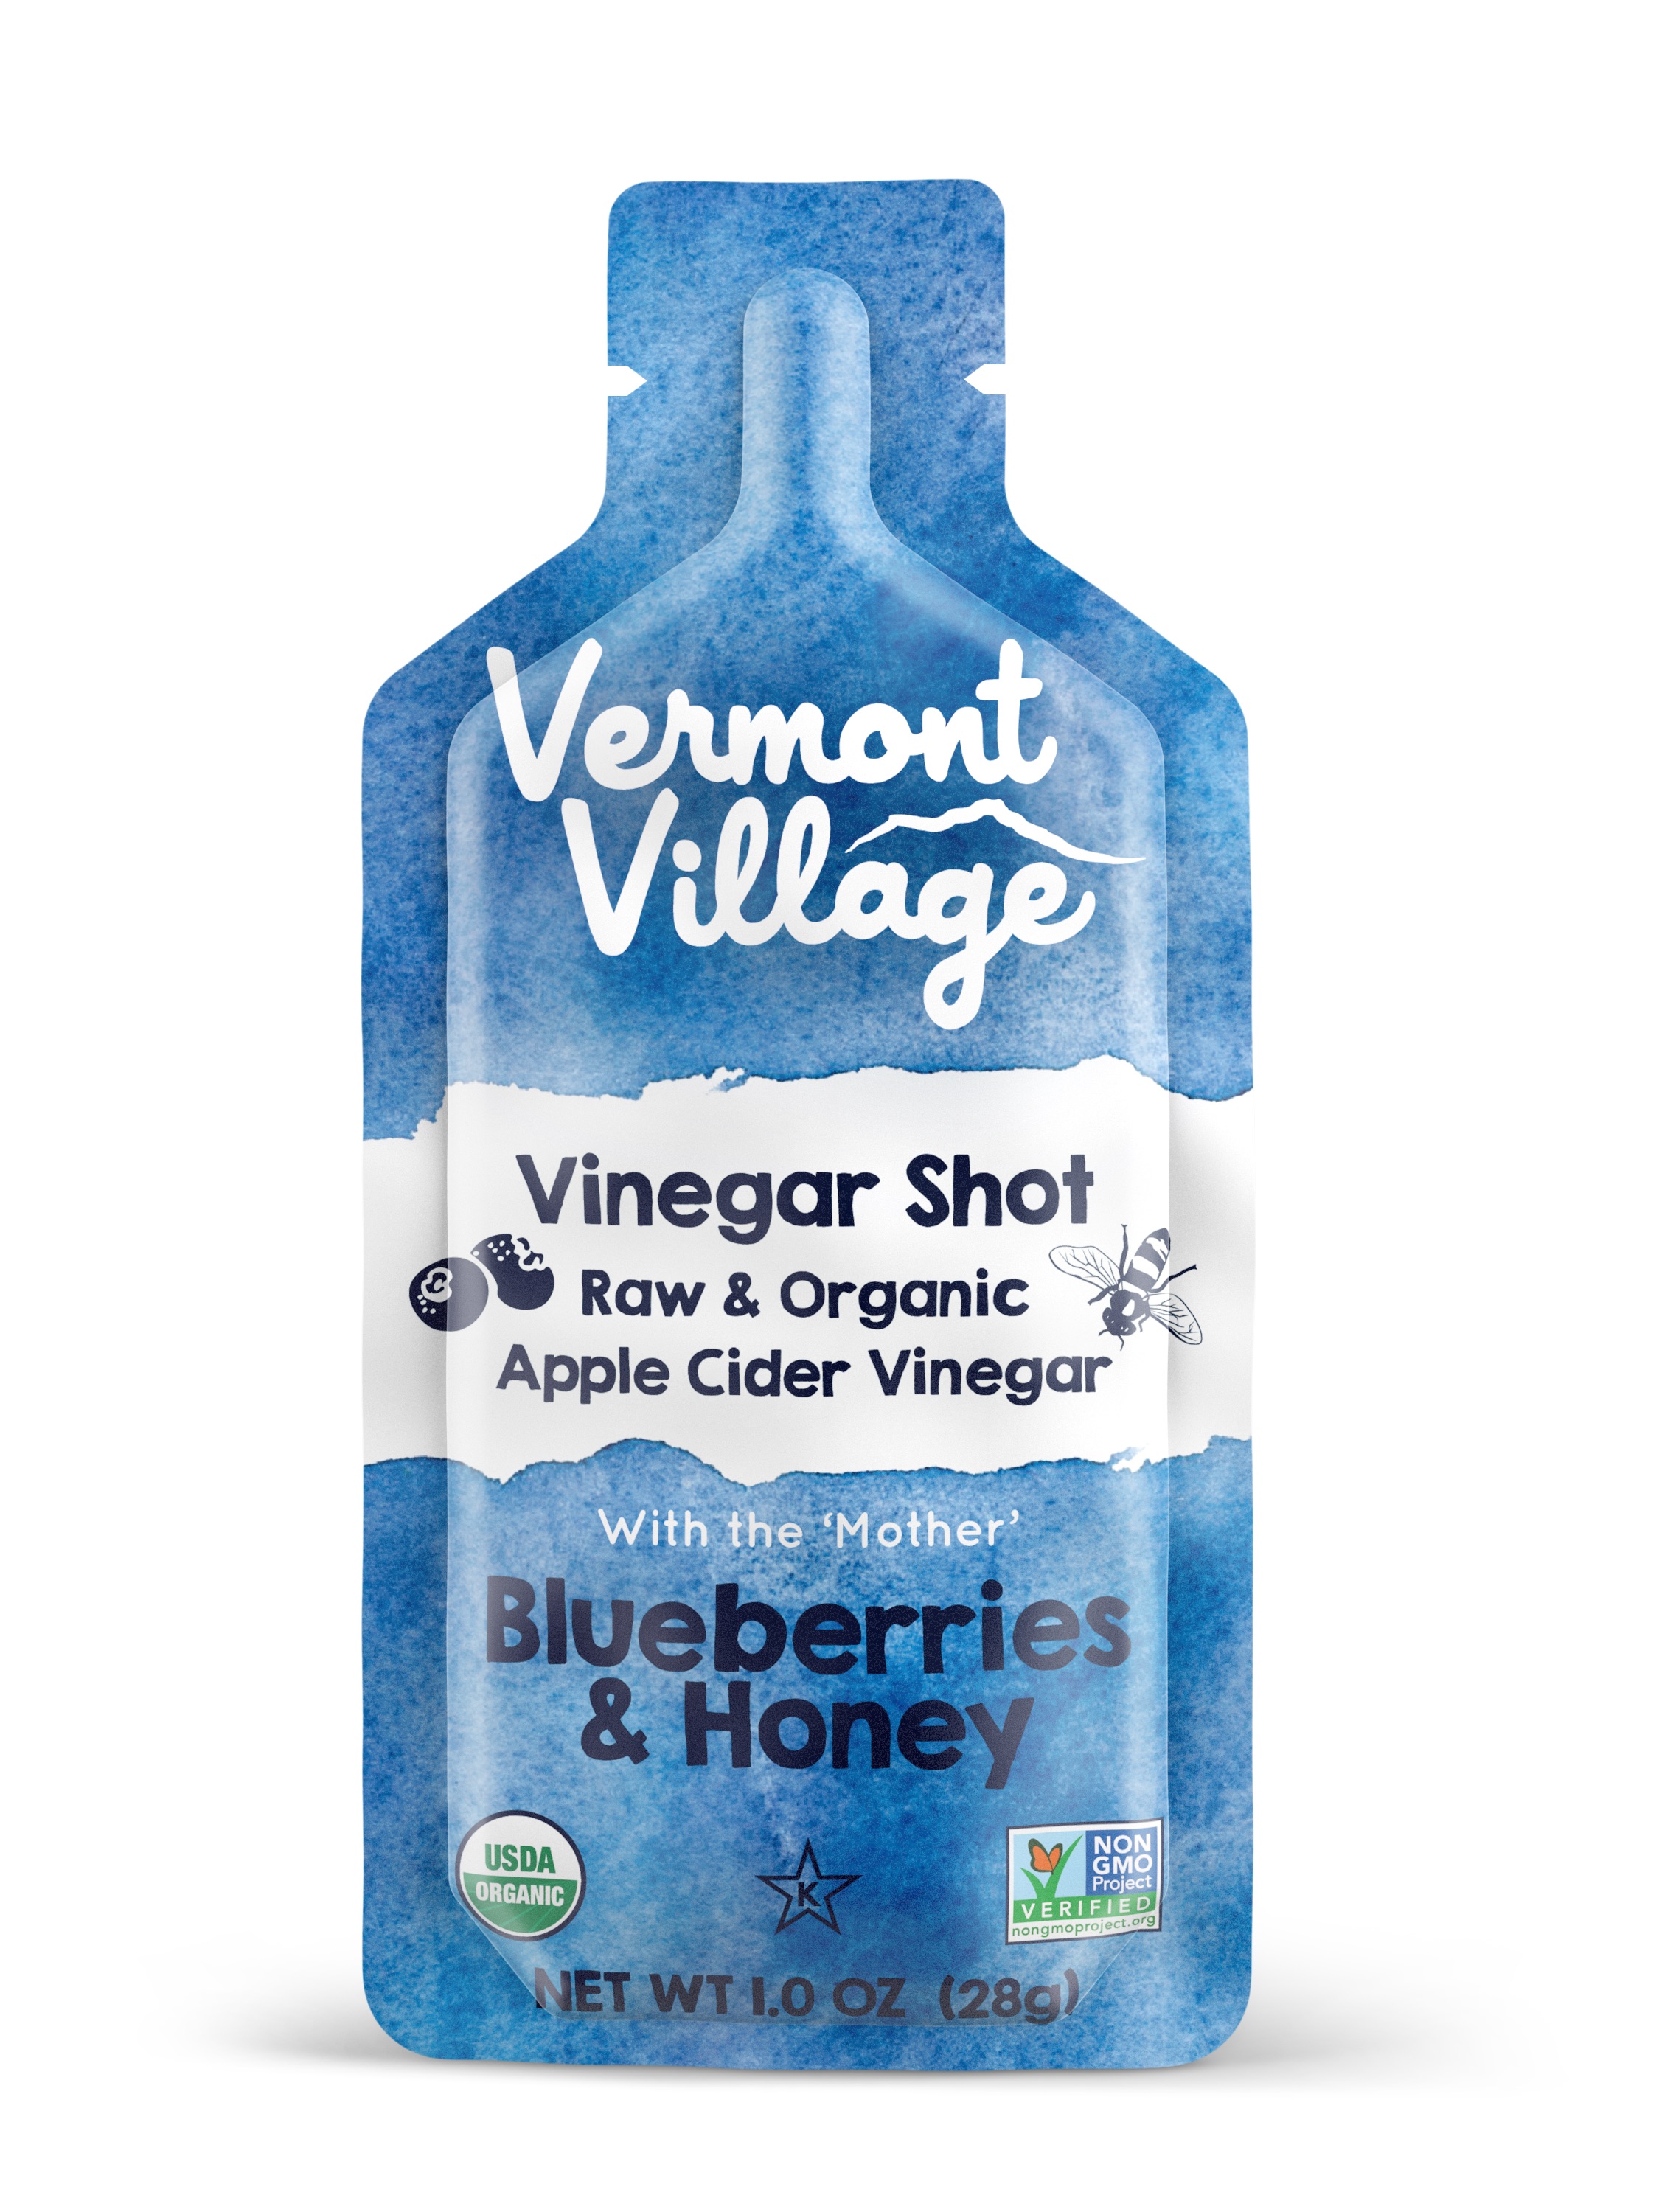 Raw Organic Blueberries and Honey Vinegar Shot/Vermont Village